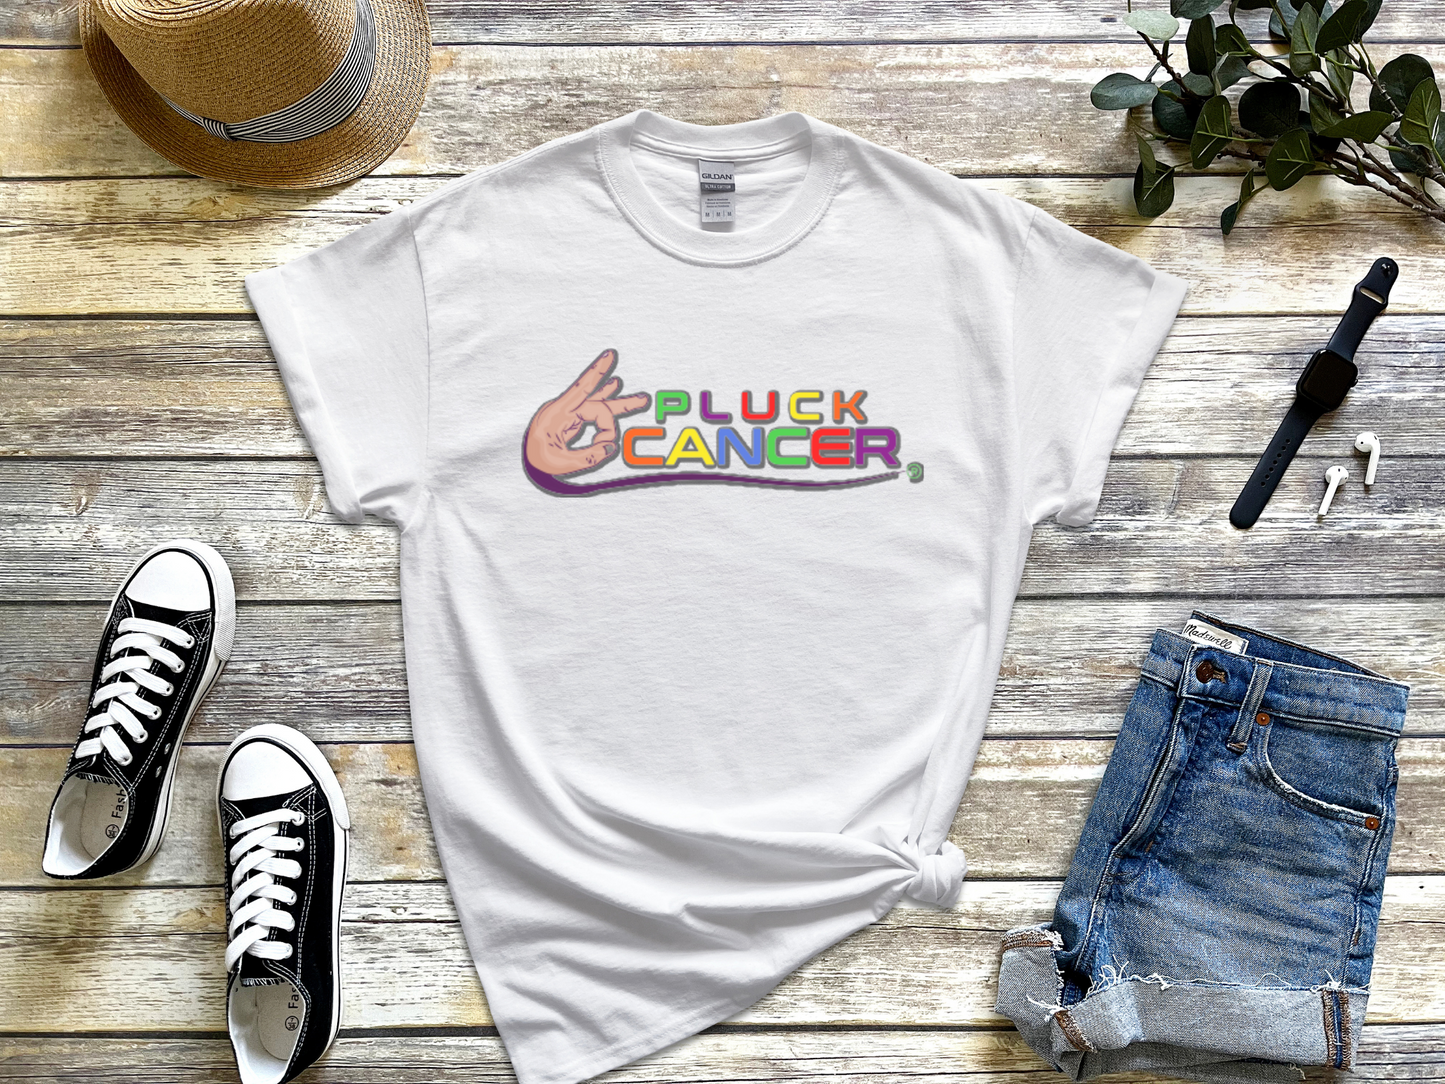 Pluck Cancer Women's Cotton T-Shirt - White